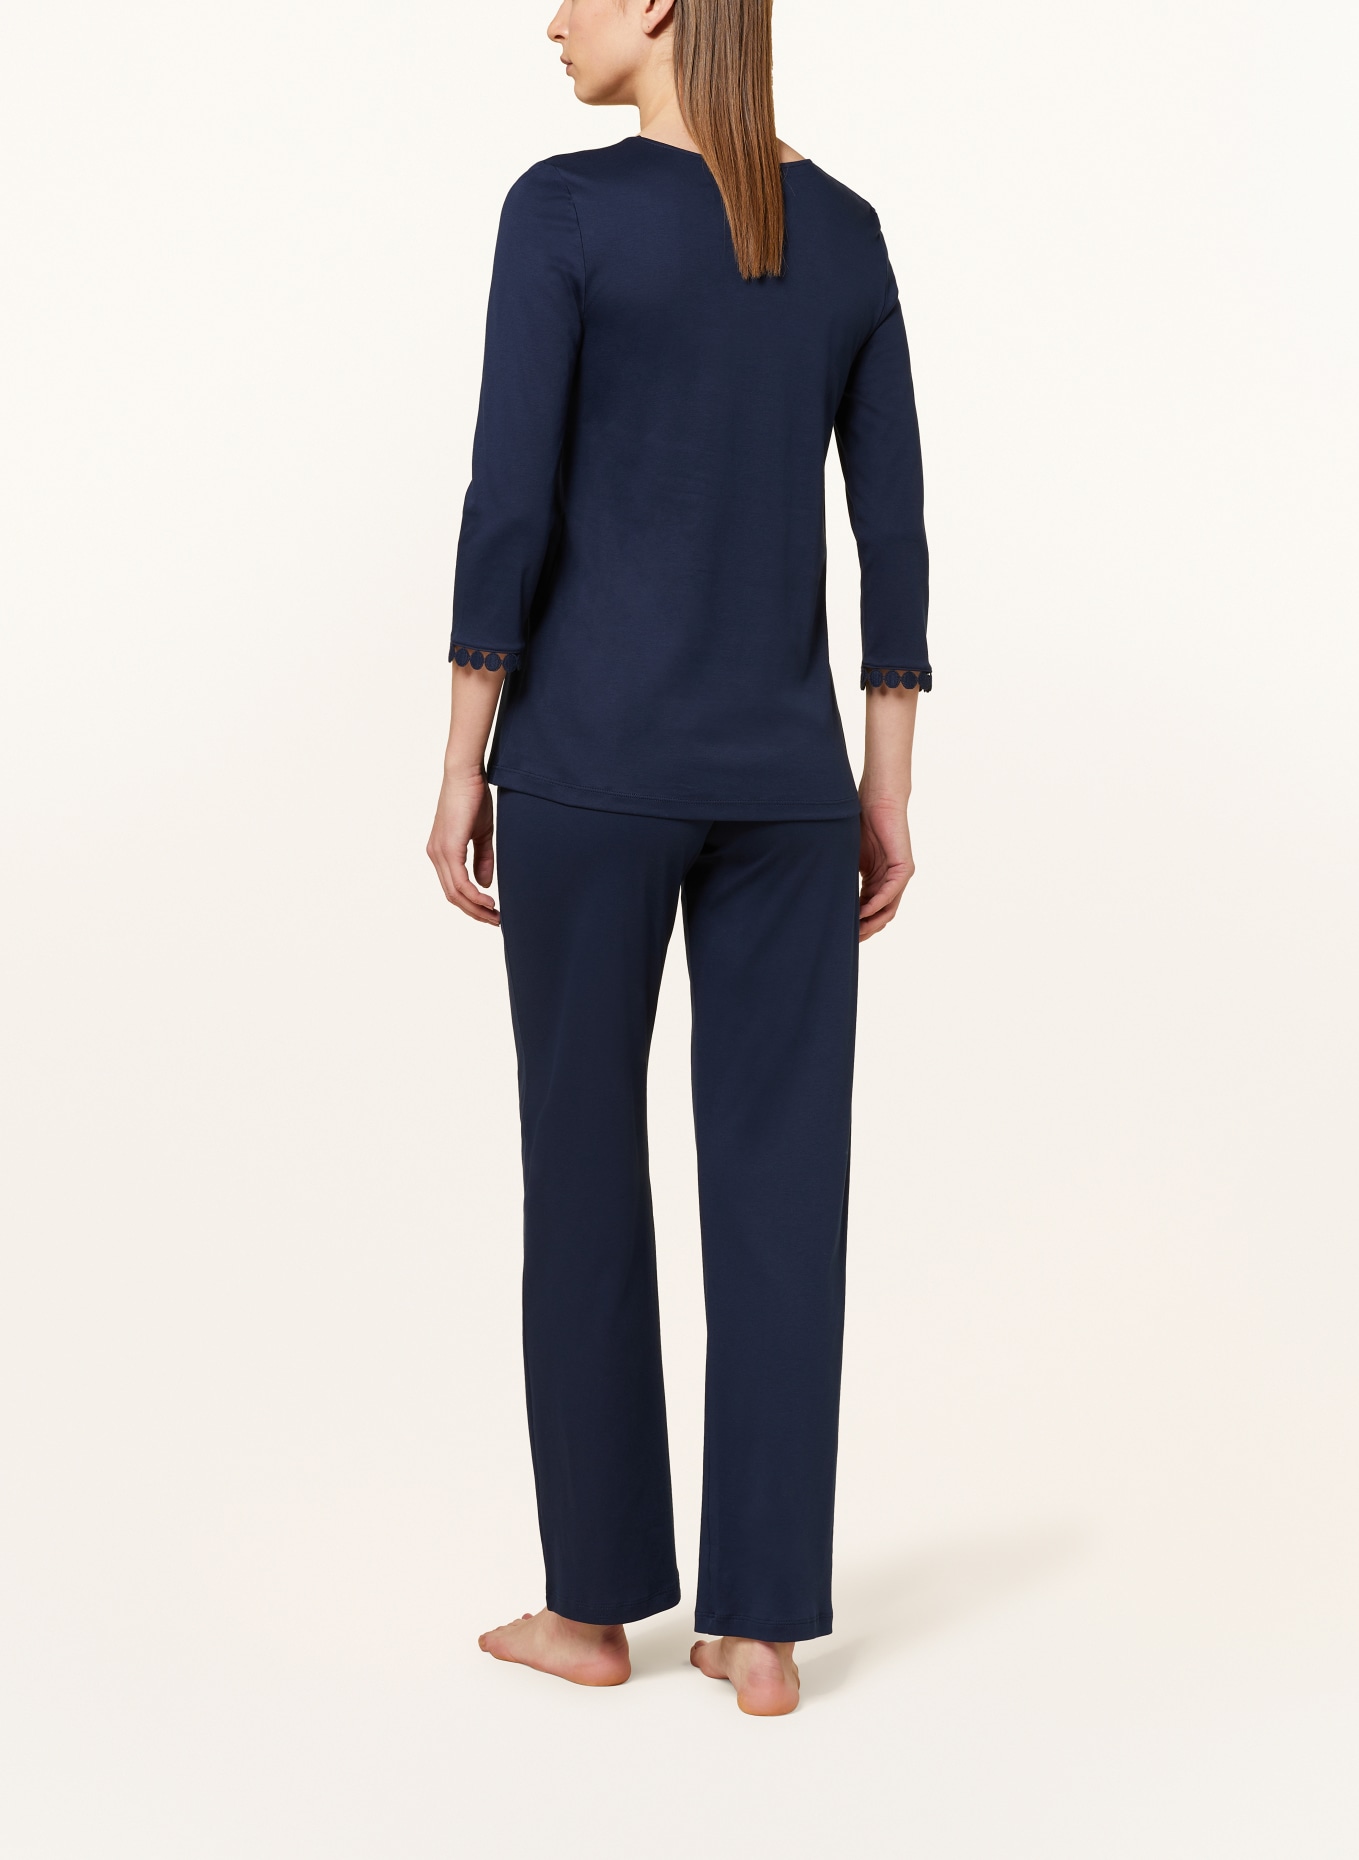 HANRO Pajamas ROSA with 3/4 sleeves, Color: DARK BLUE (Image 3)